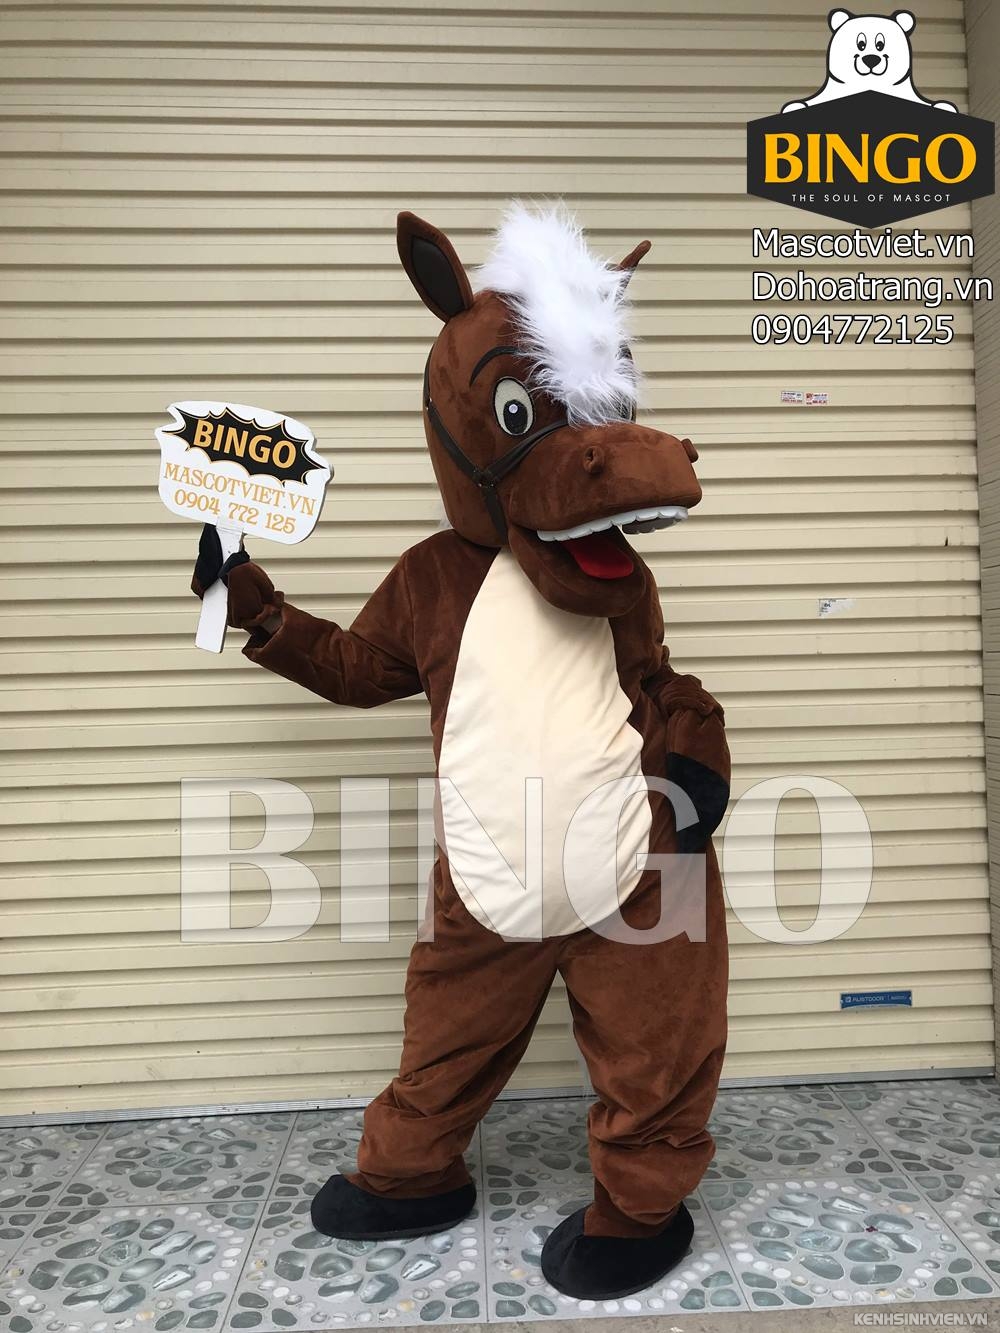 mascot-con-ngua-bingo-costumes-0904772125.jpg